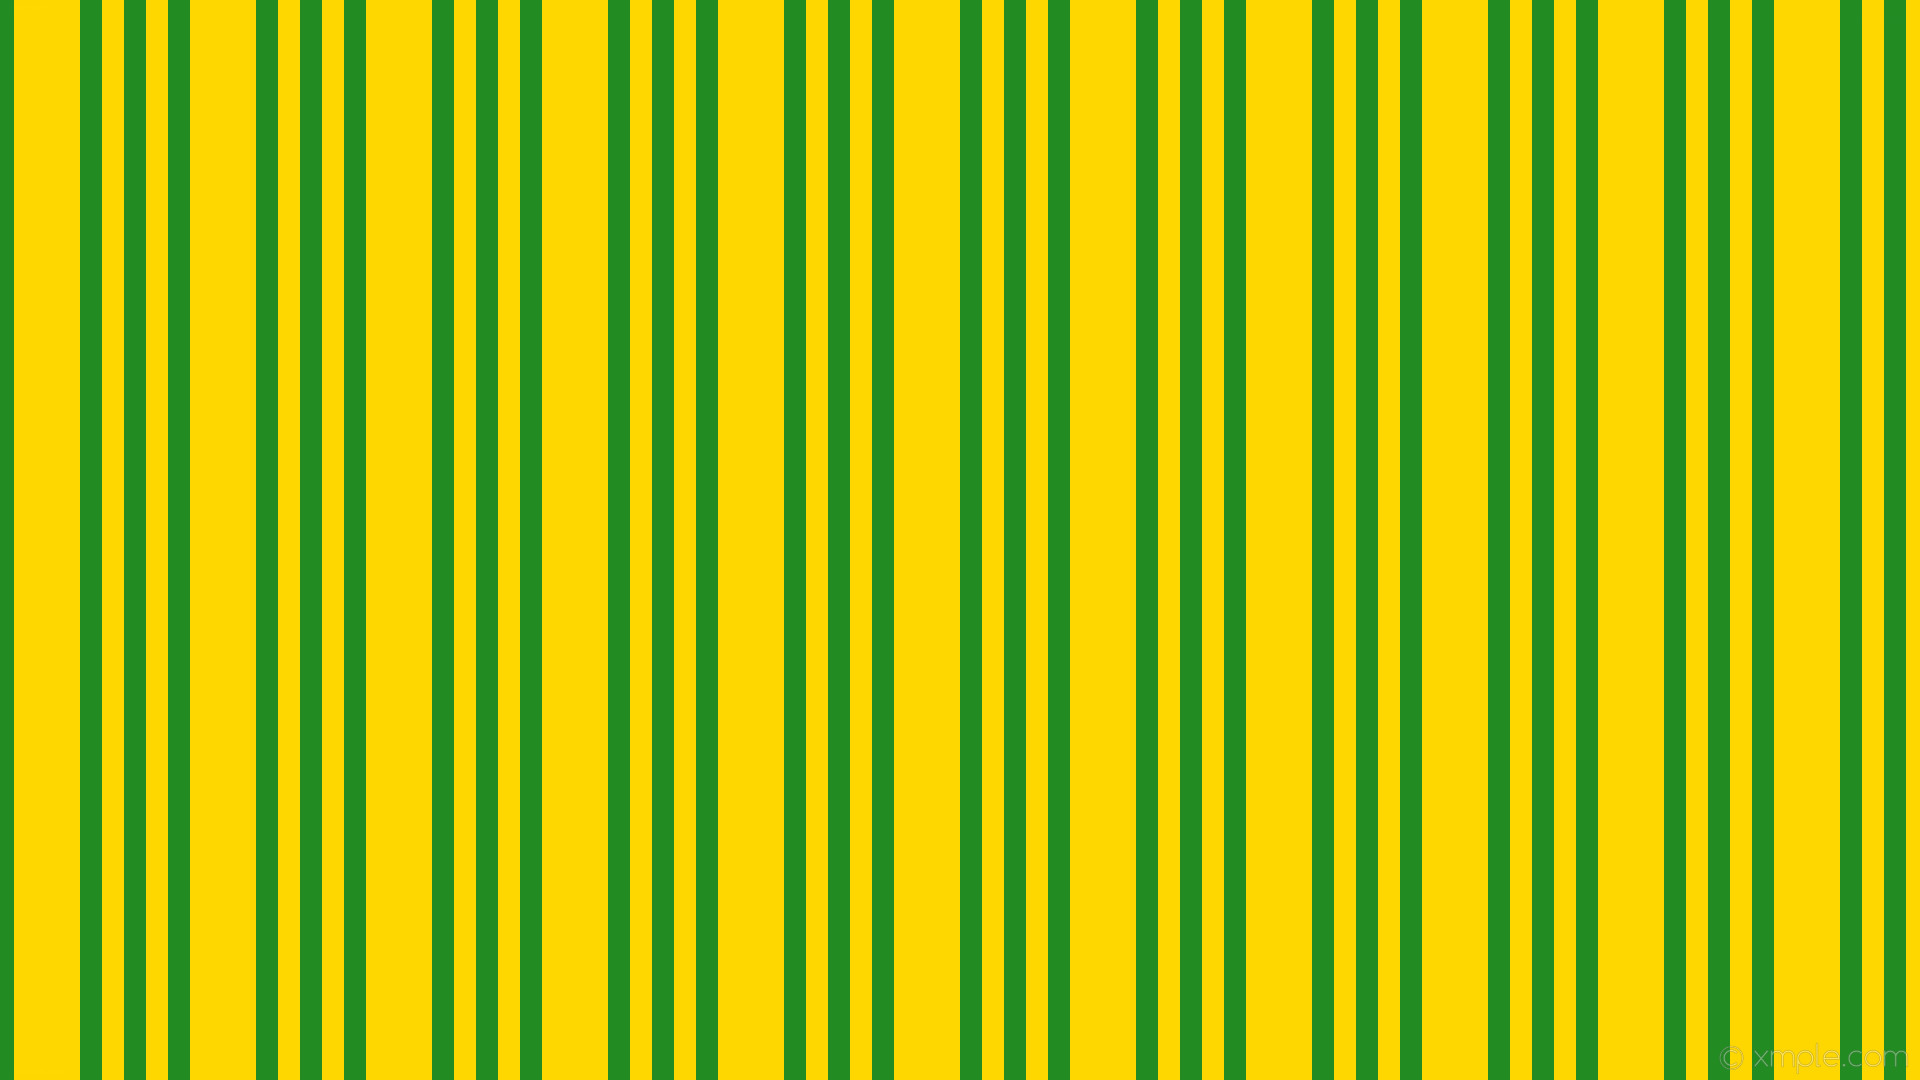 1920x1080 wallpaper stripes streaks green lines yellow forest green gold #228b22  #ffd700 vertical 22px 66px